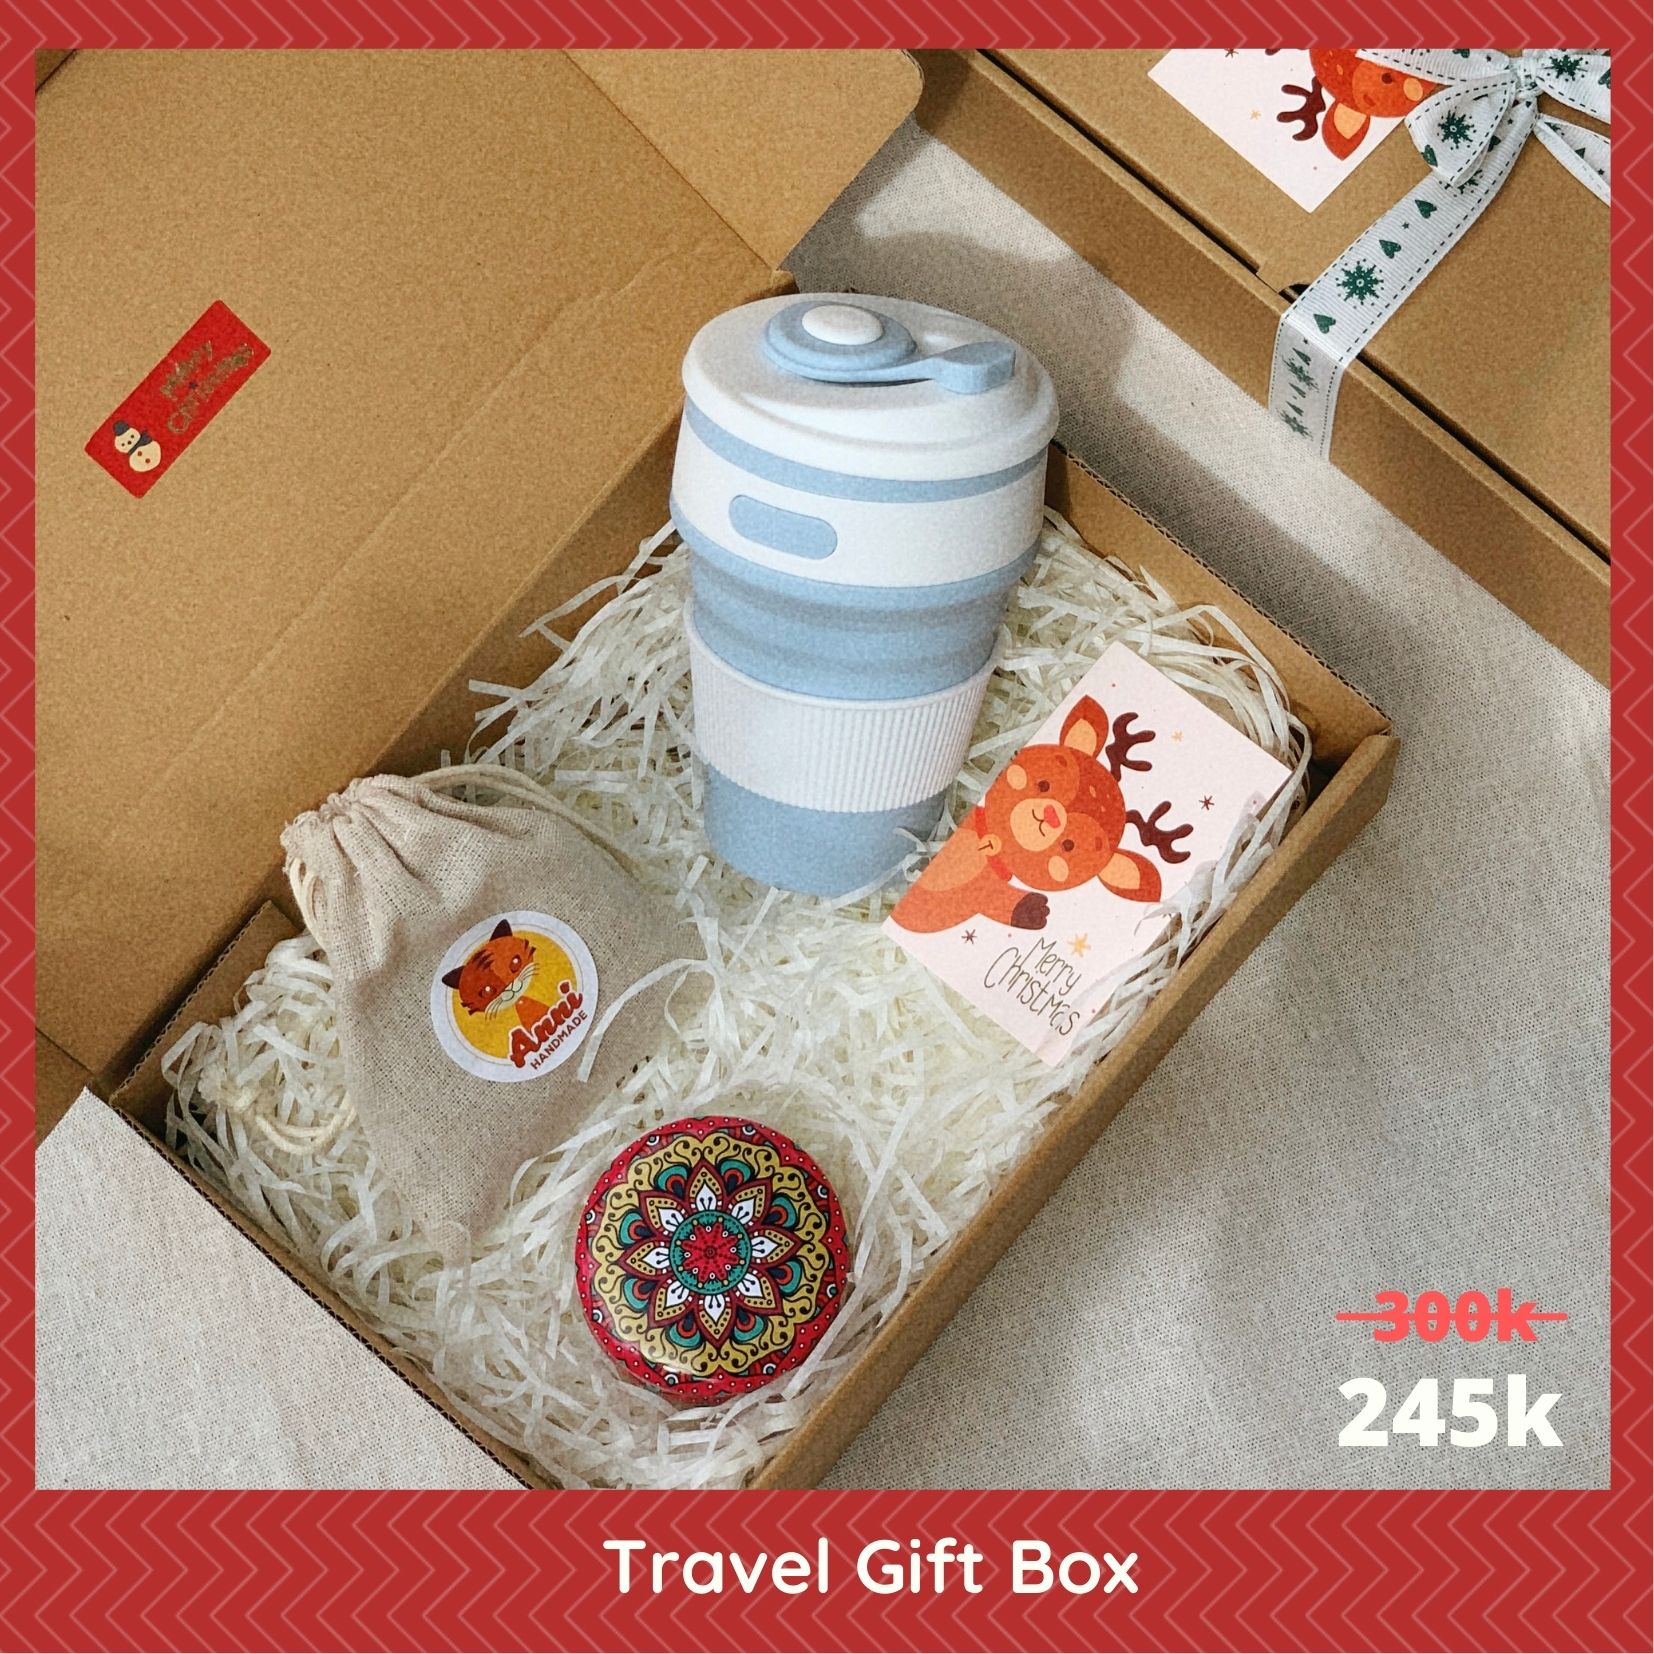 Travel Gift Box - Anni Handmade